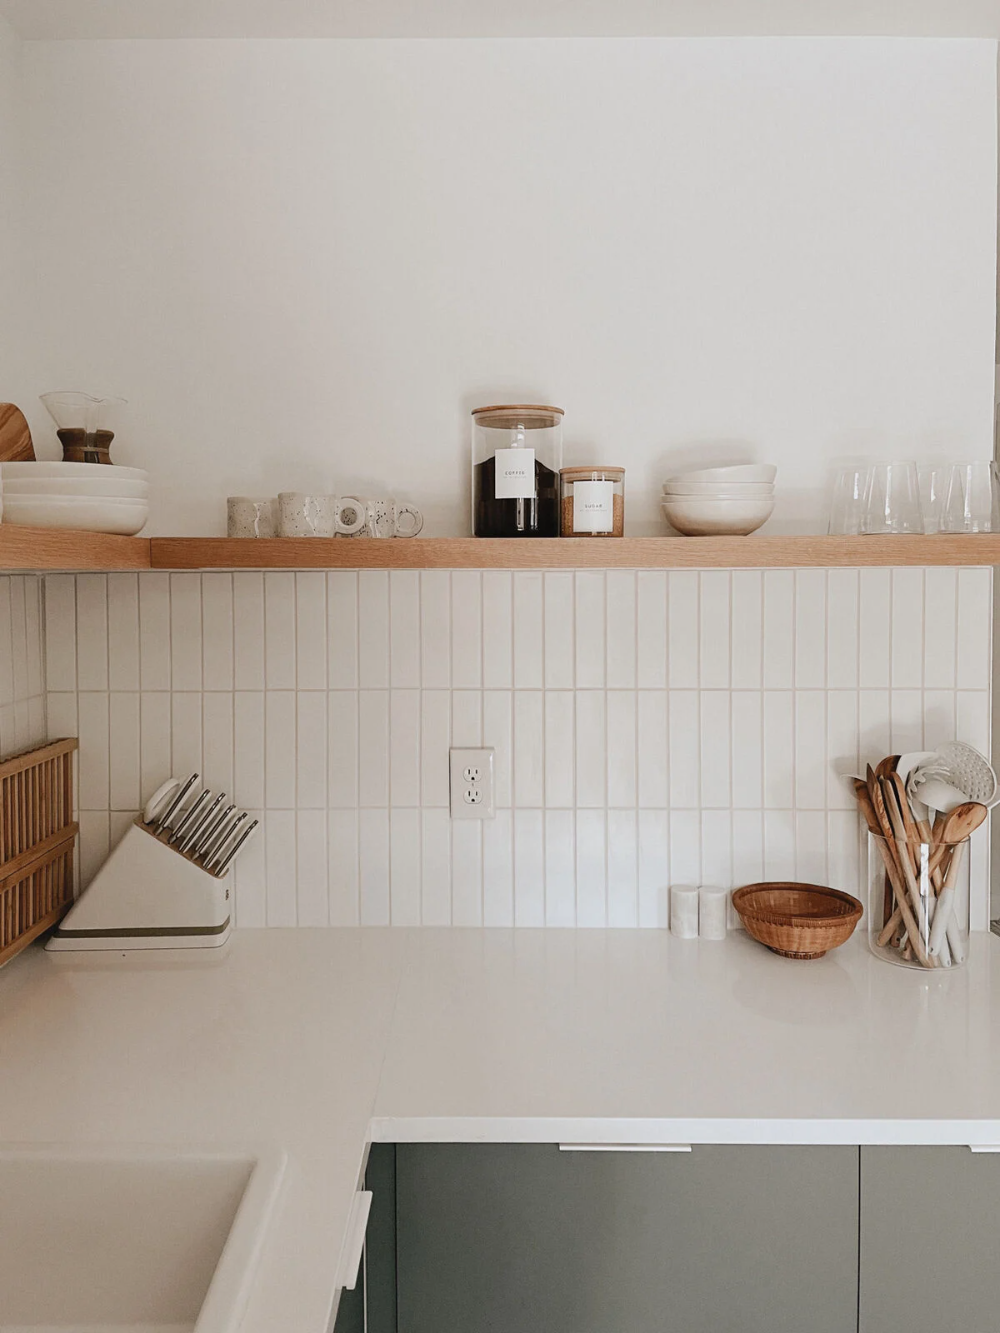 Kitchen Backsplash Tiles Ideas To Try